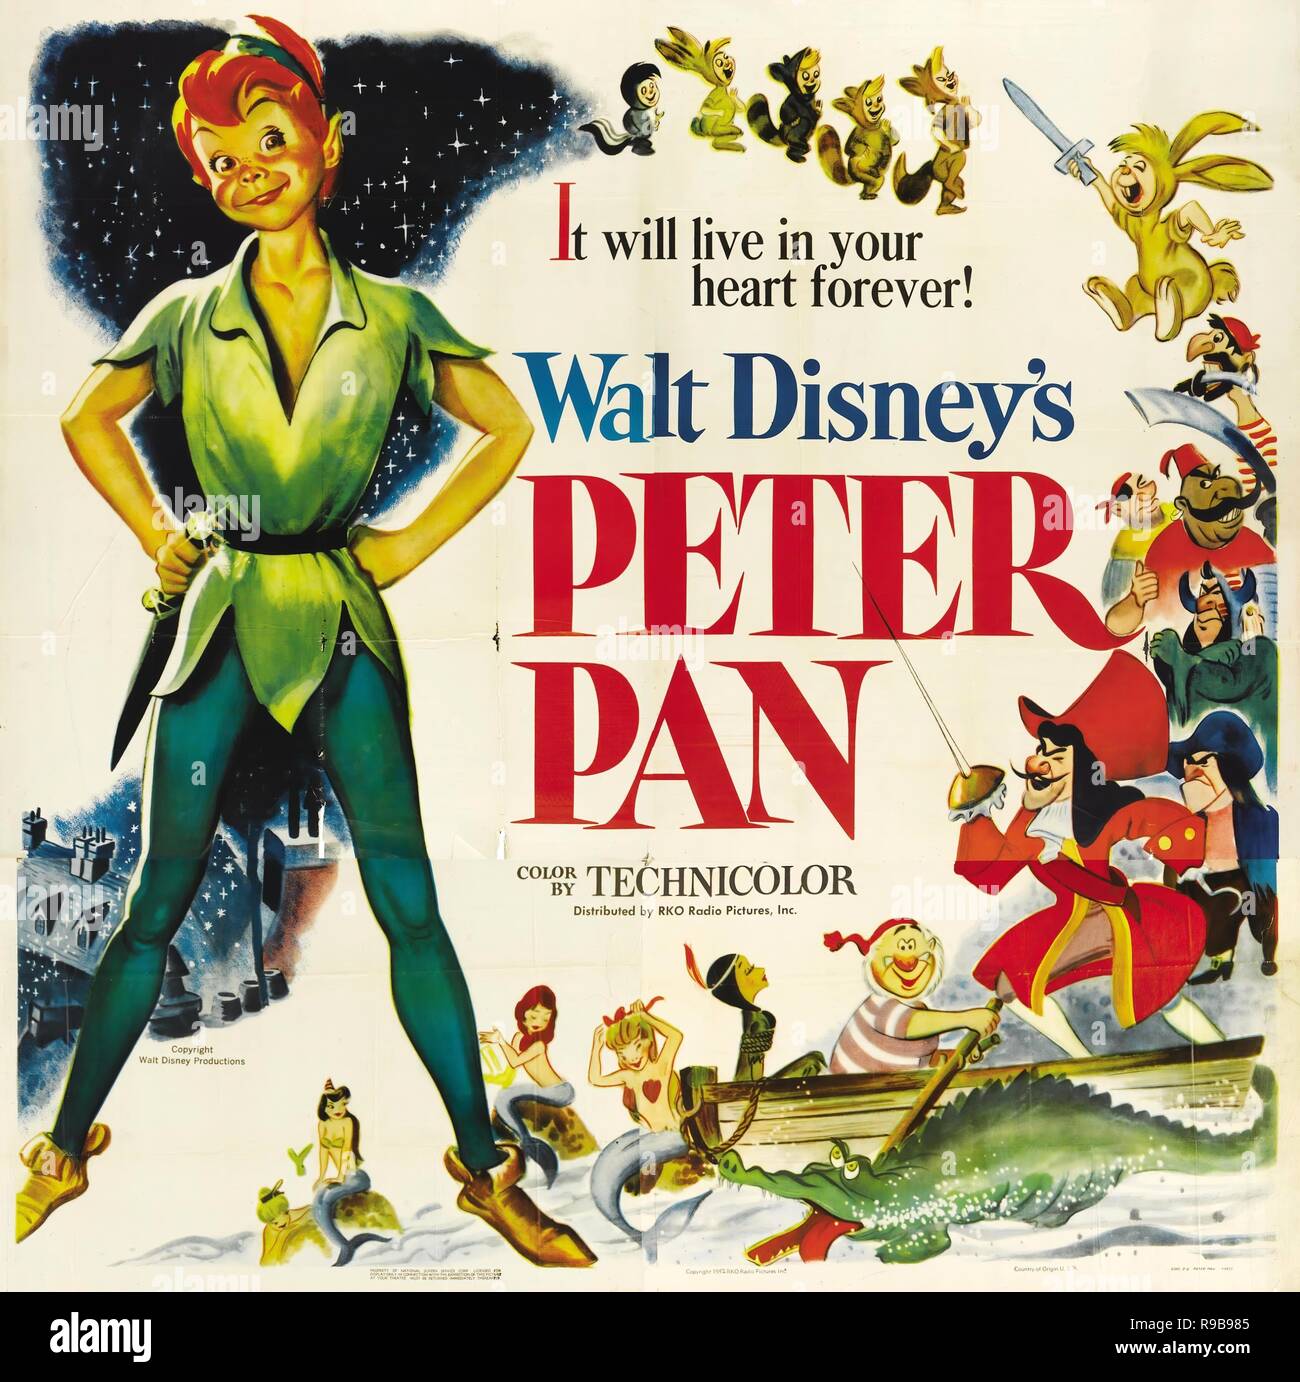 Original film title: PETER PAN. English title: PETER PAN. Year: 1953.  Director: WILFRED JACKSON; HAMILTON LUKE. Credit: WALT DISNEY PRODUCTIONS /  Album Stock Photo - Alamy